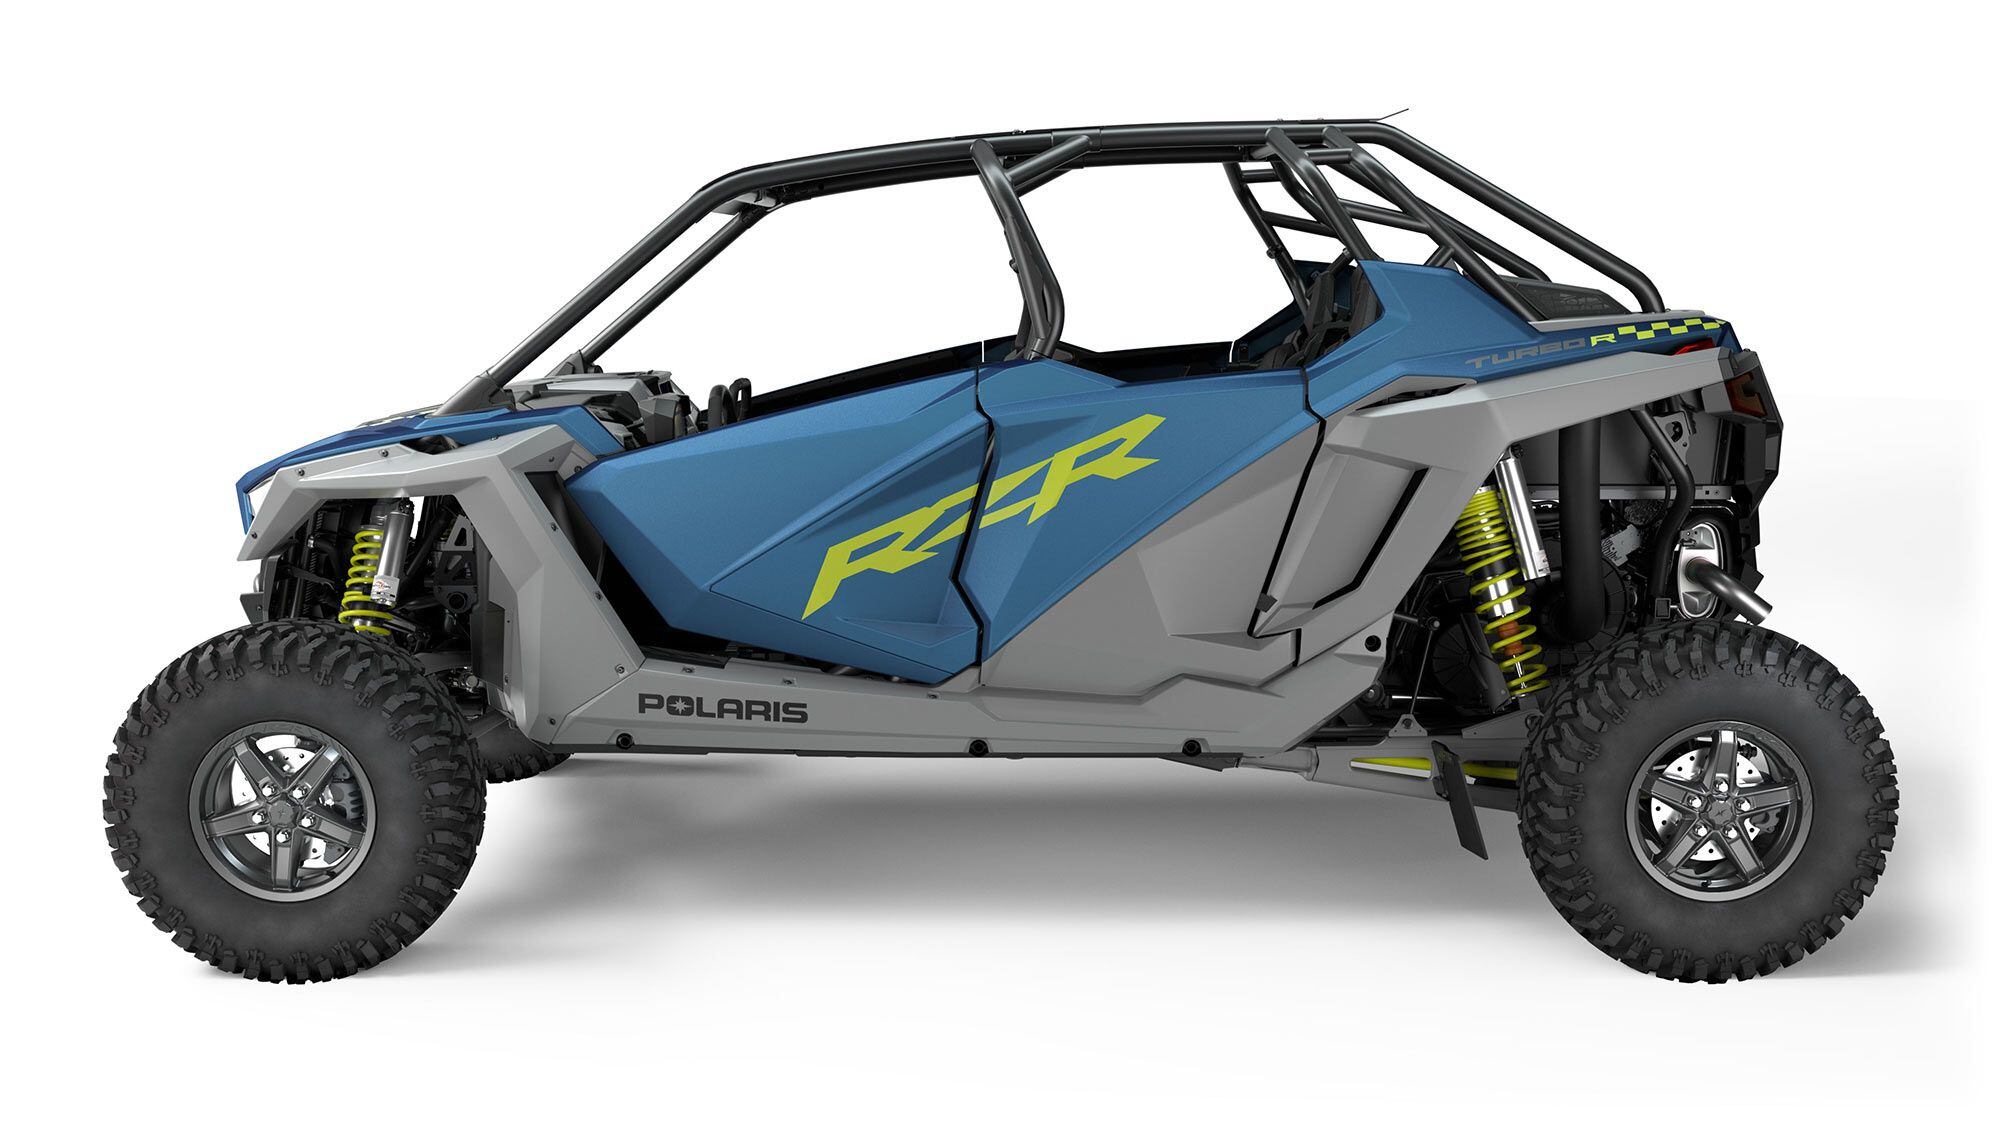 2022 Polaris RZR Turbo R 4 Premium side view in Matte Blue Slate color.